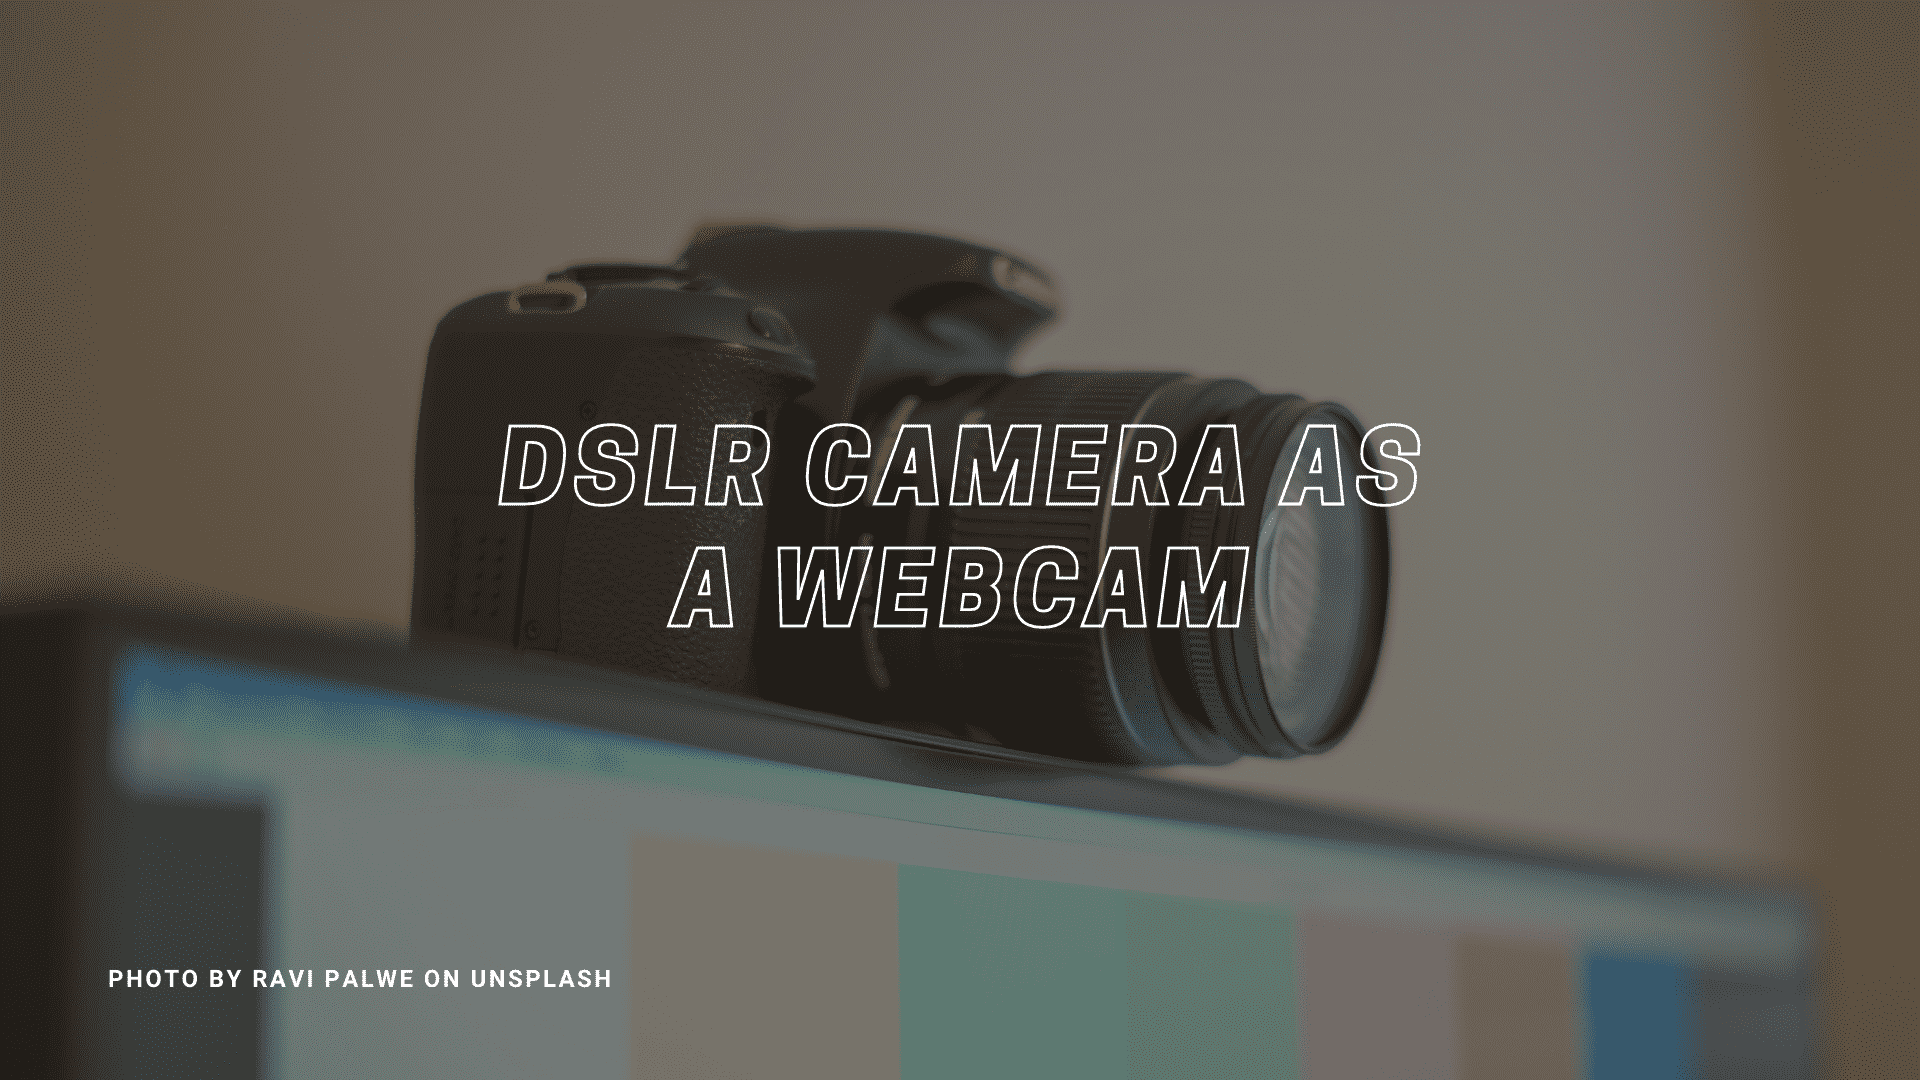 Use DSLR Camera As A Webcam